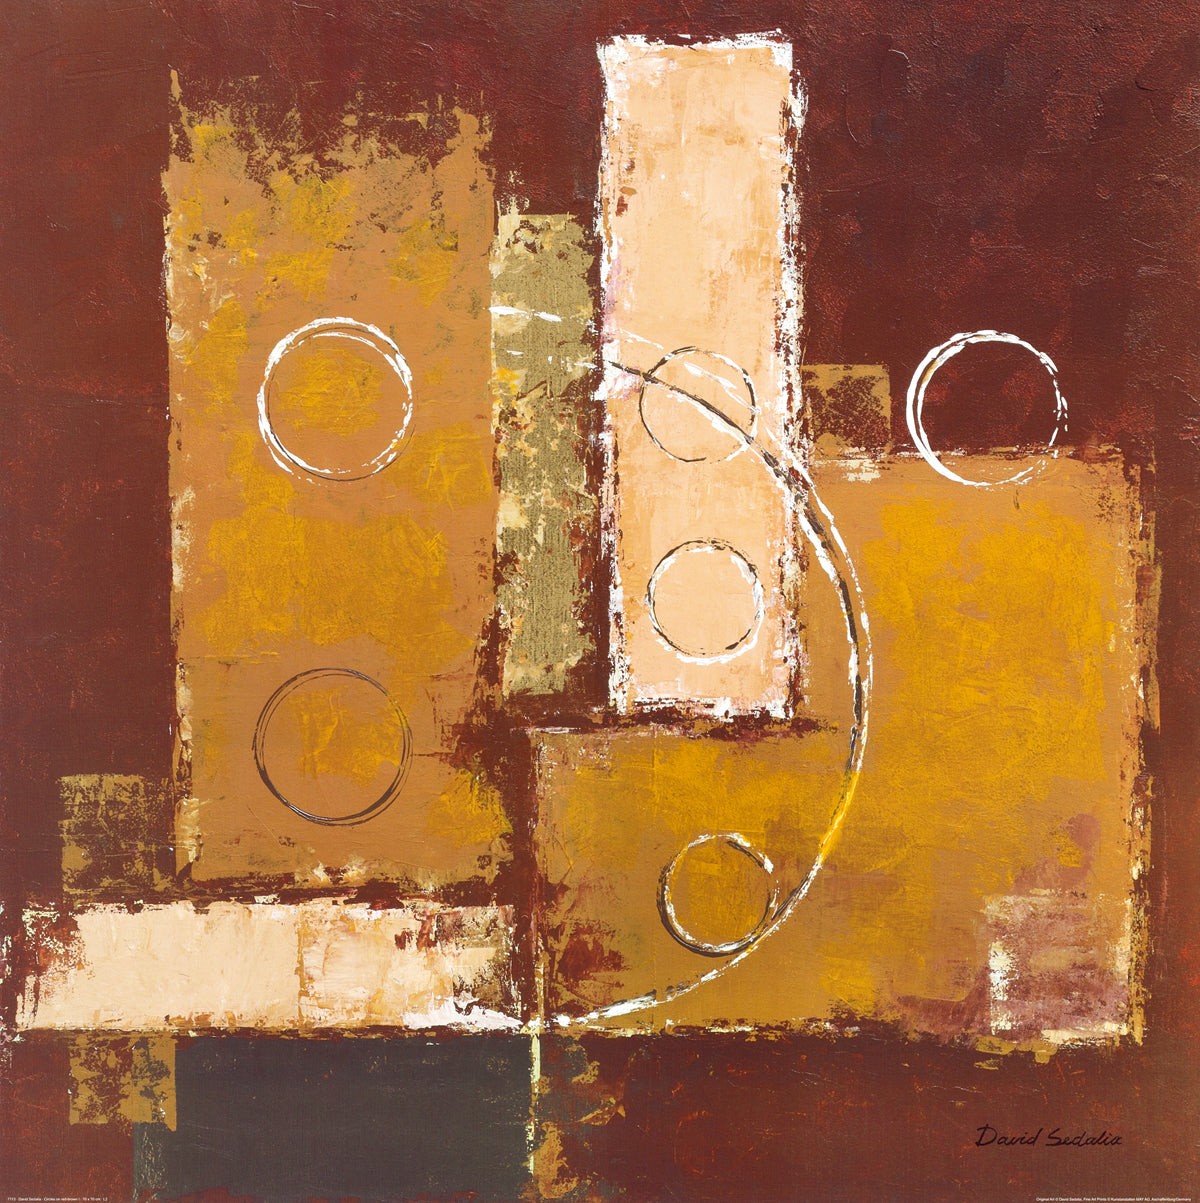 David Sedalia - Circles on red-brown I